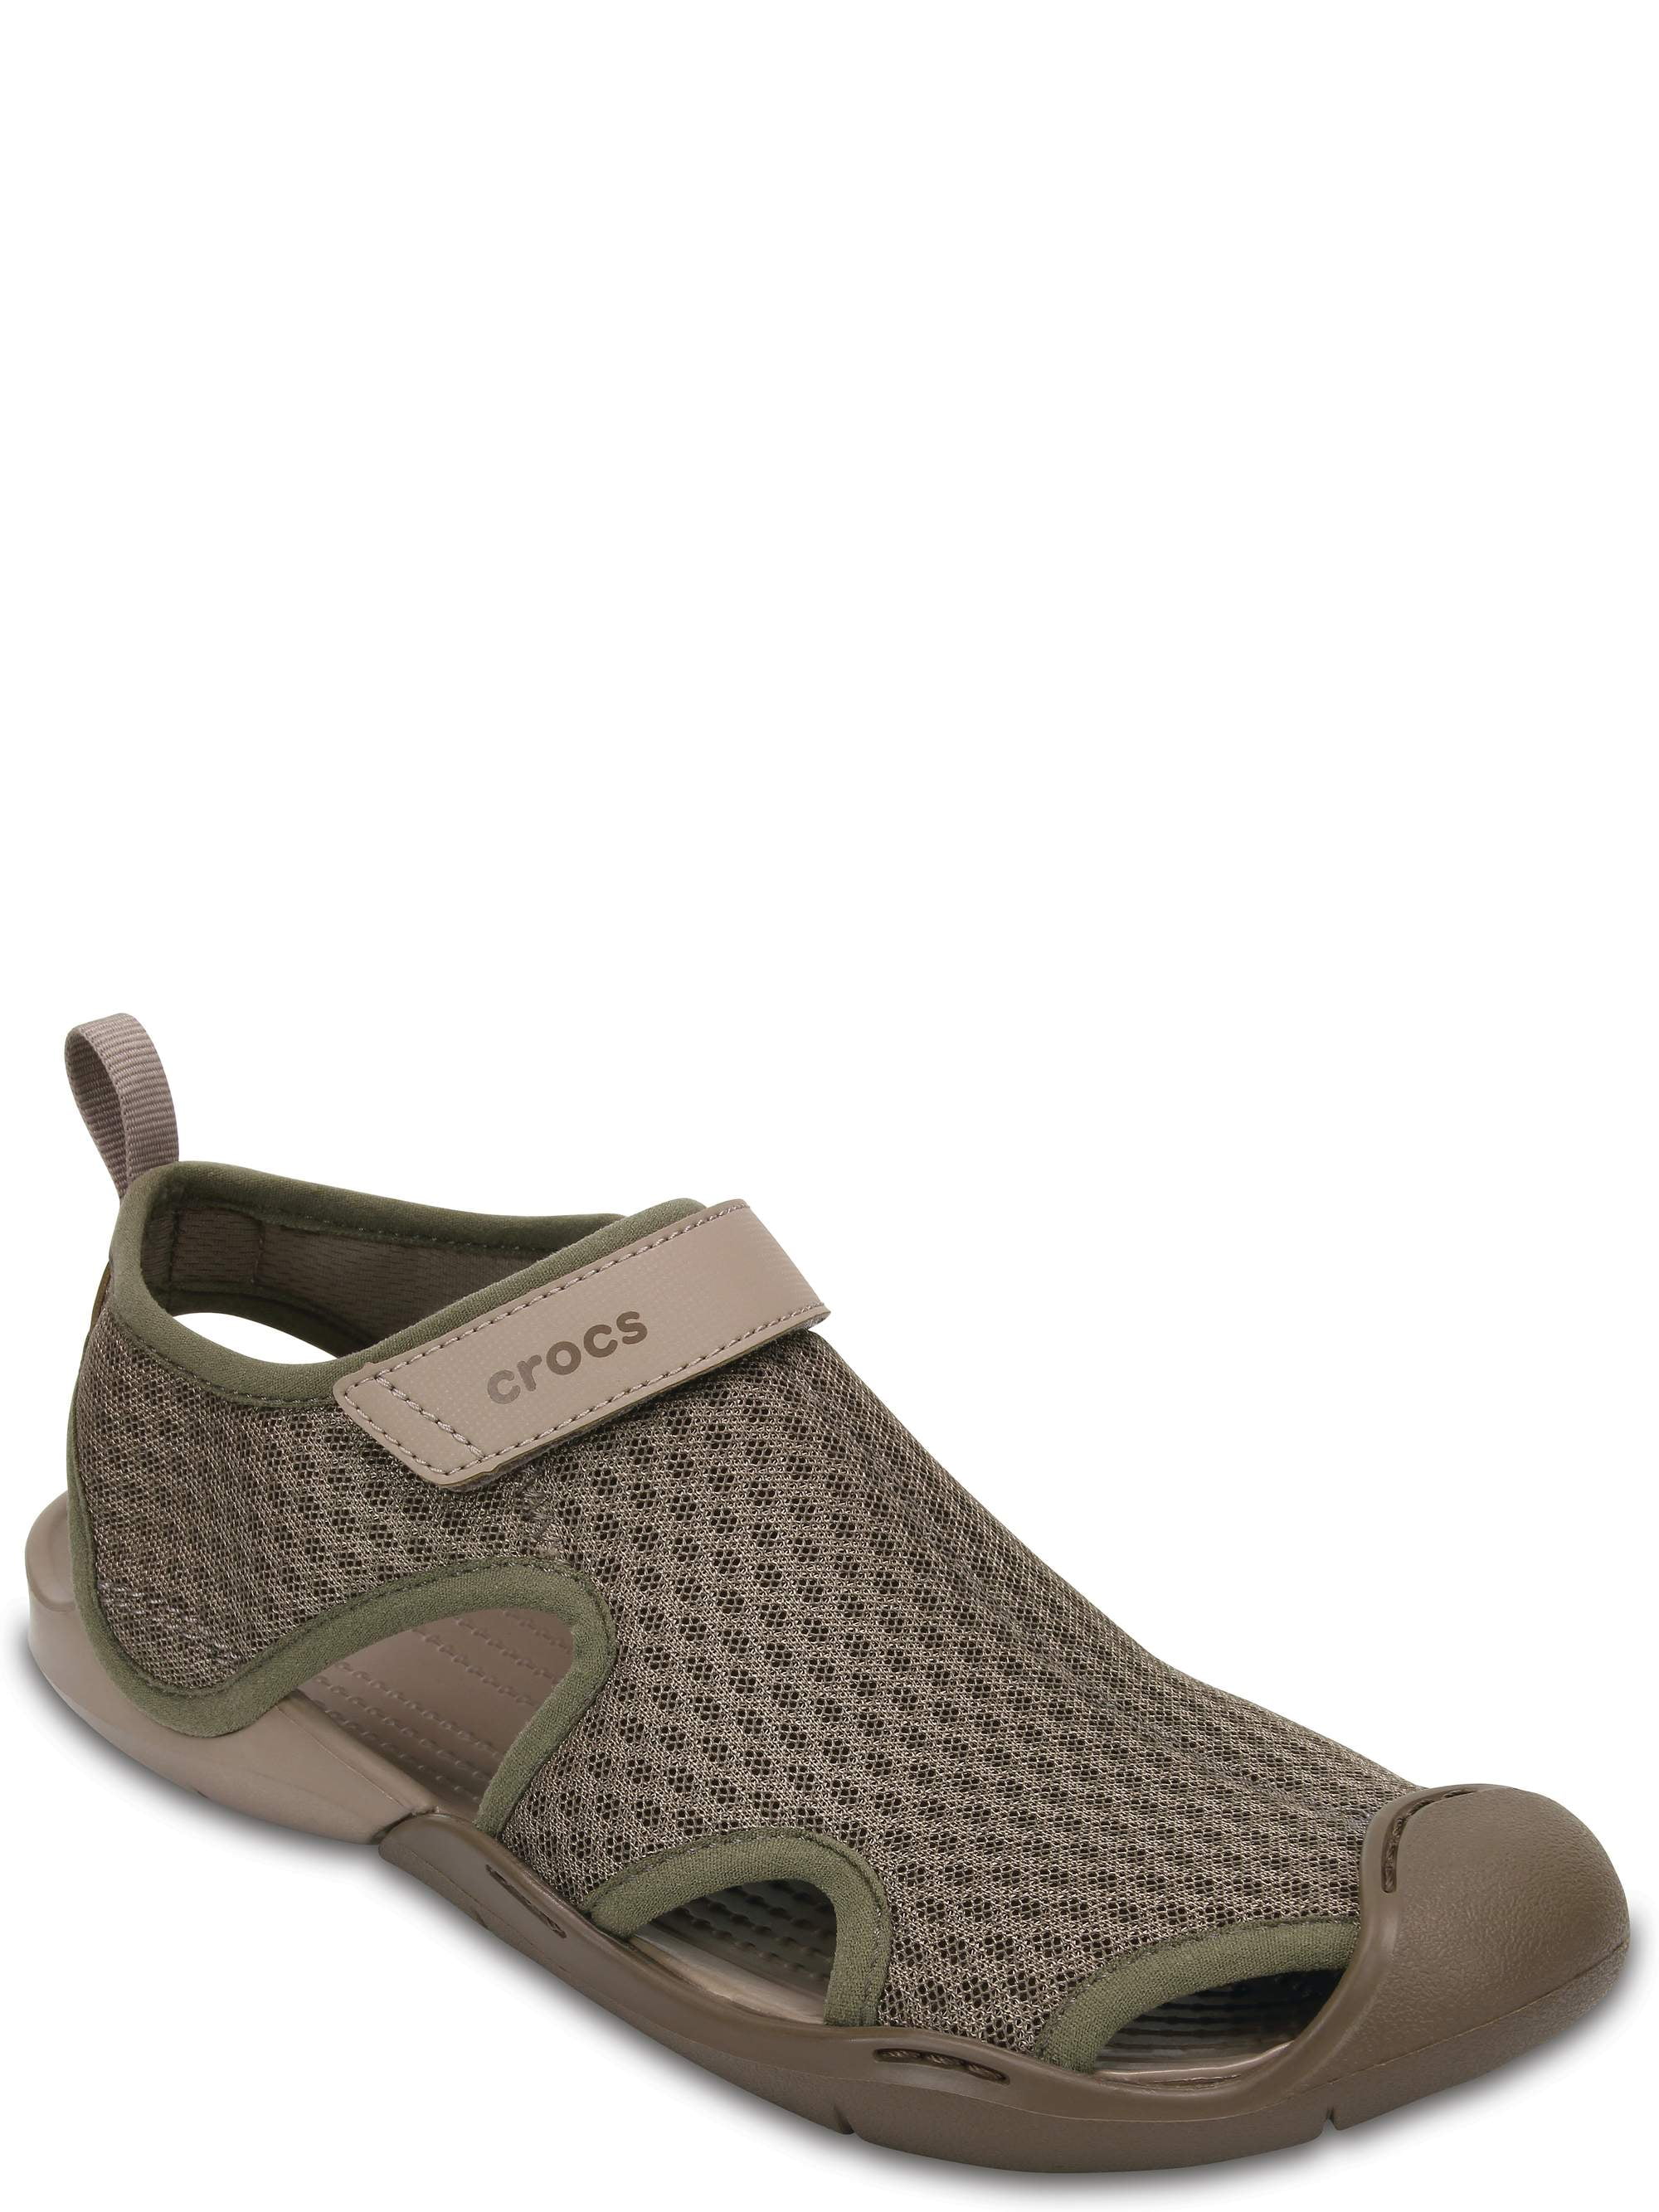 crocs swiftwater mesh sandal